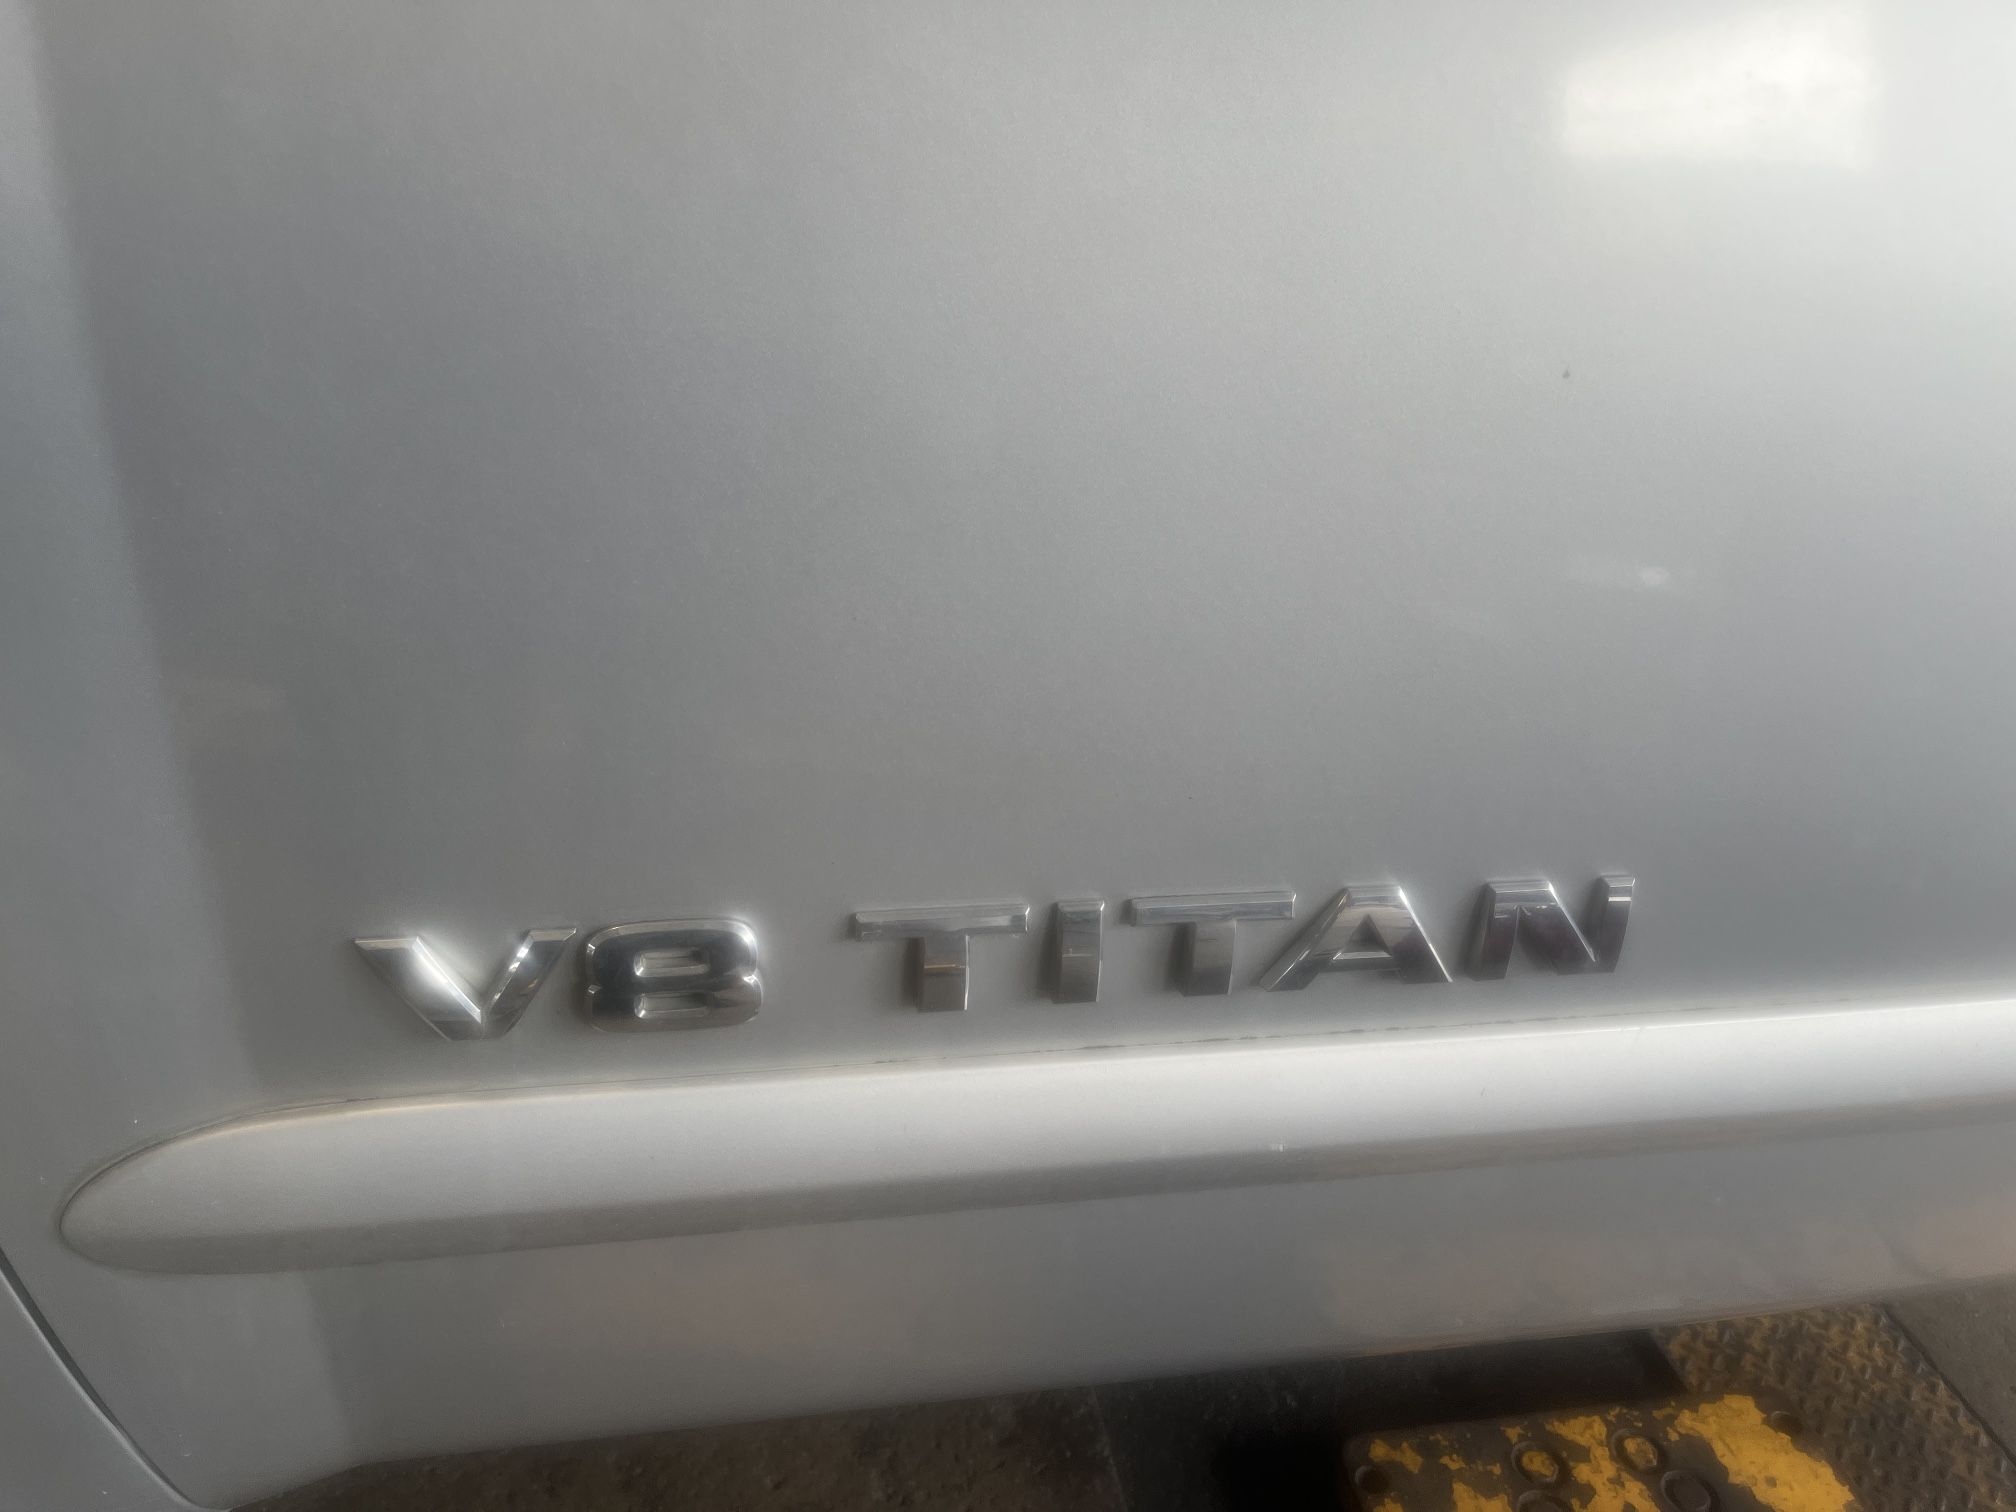 2006 Nissan Titan Parts Truck